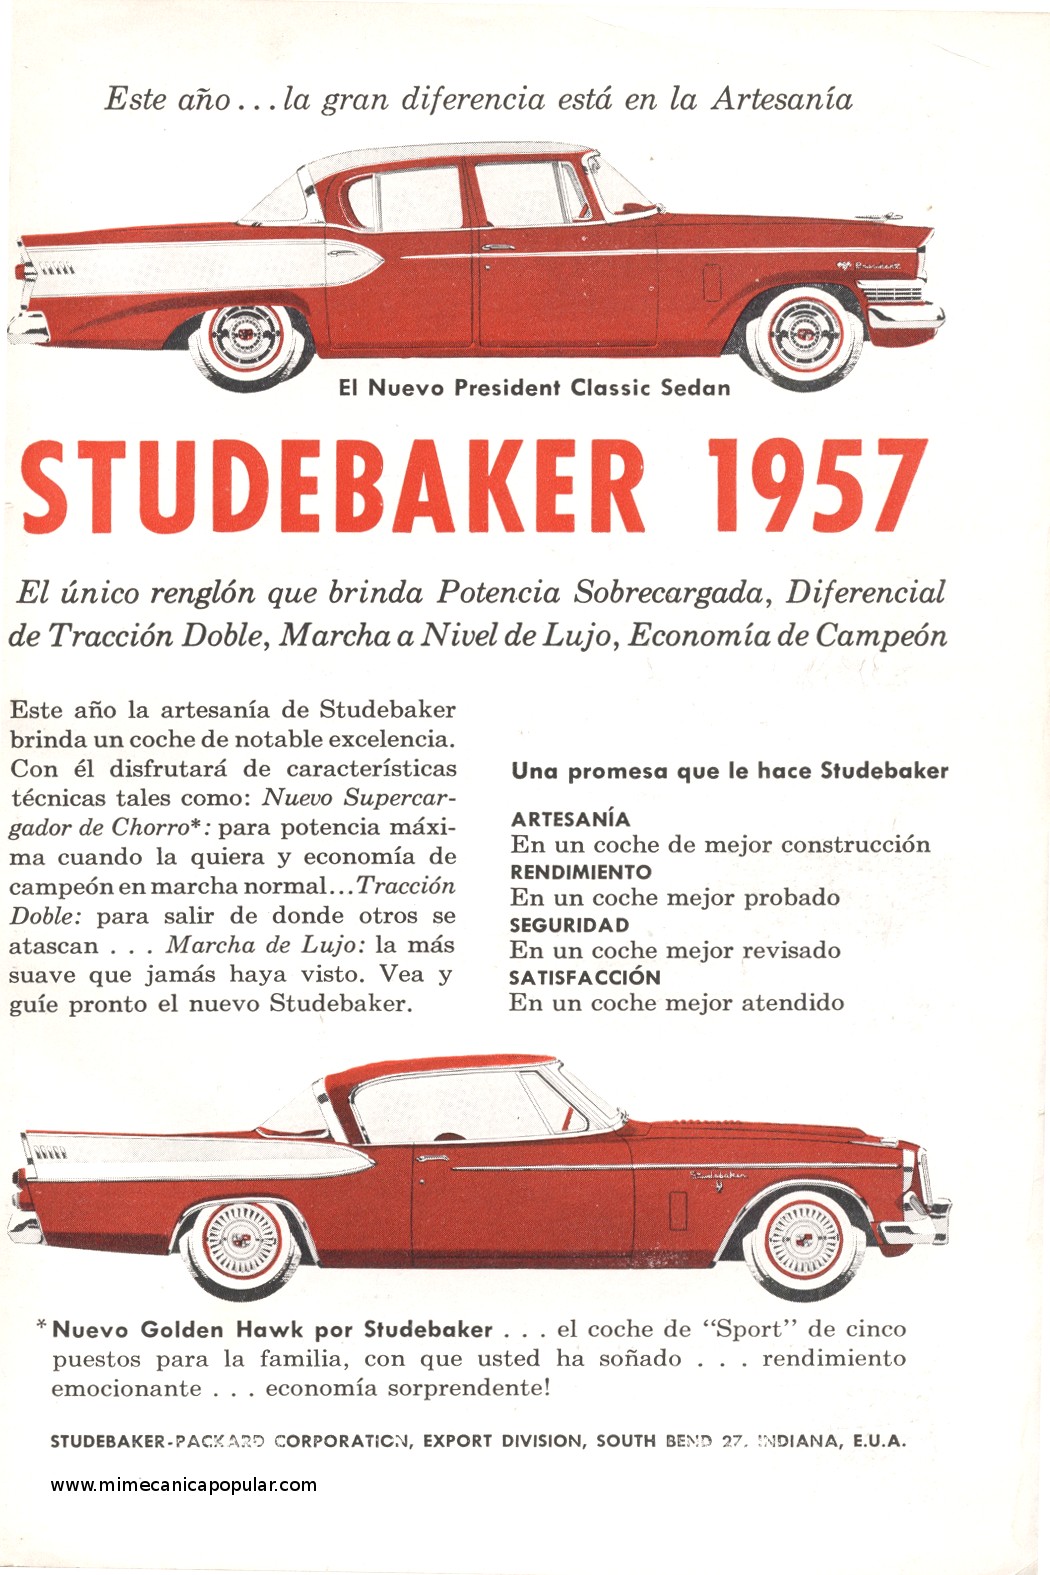 Publicidad - Studebaker President Classic Sedan 1957 - Diciembre 1956